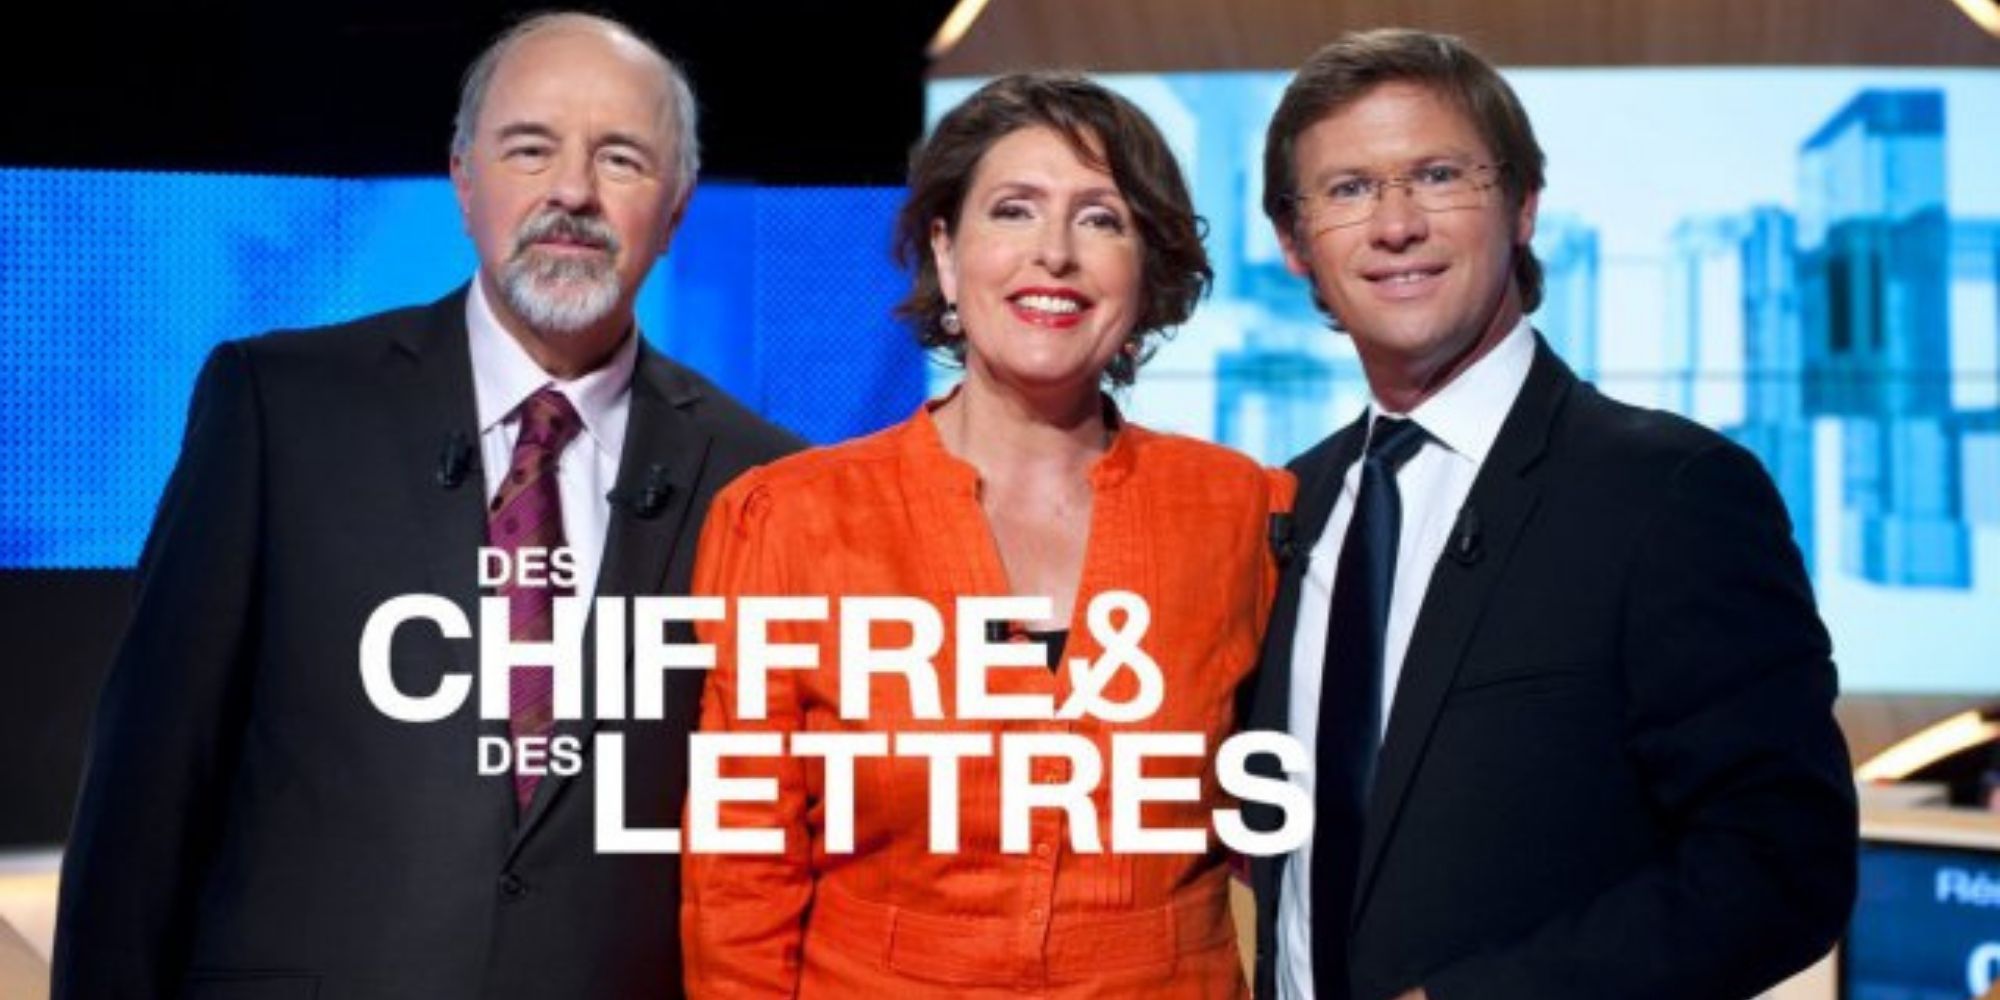 The hosts of French game show Des Chiffres Et Des Lettres